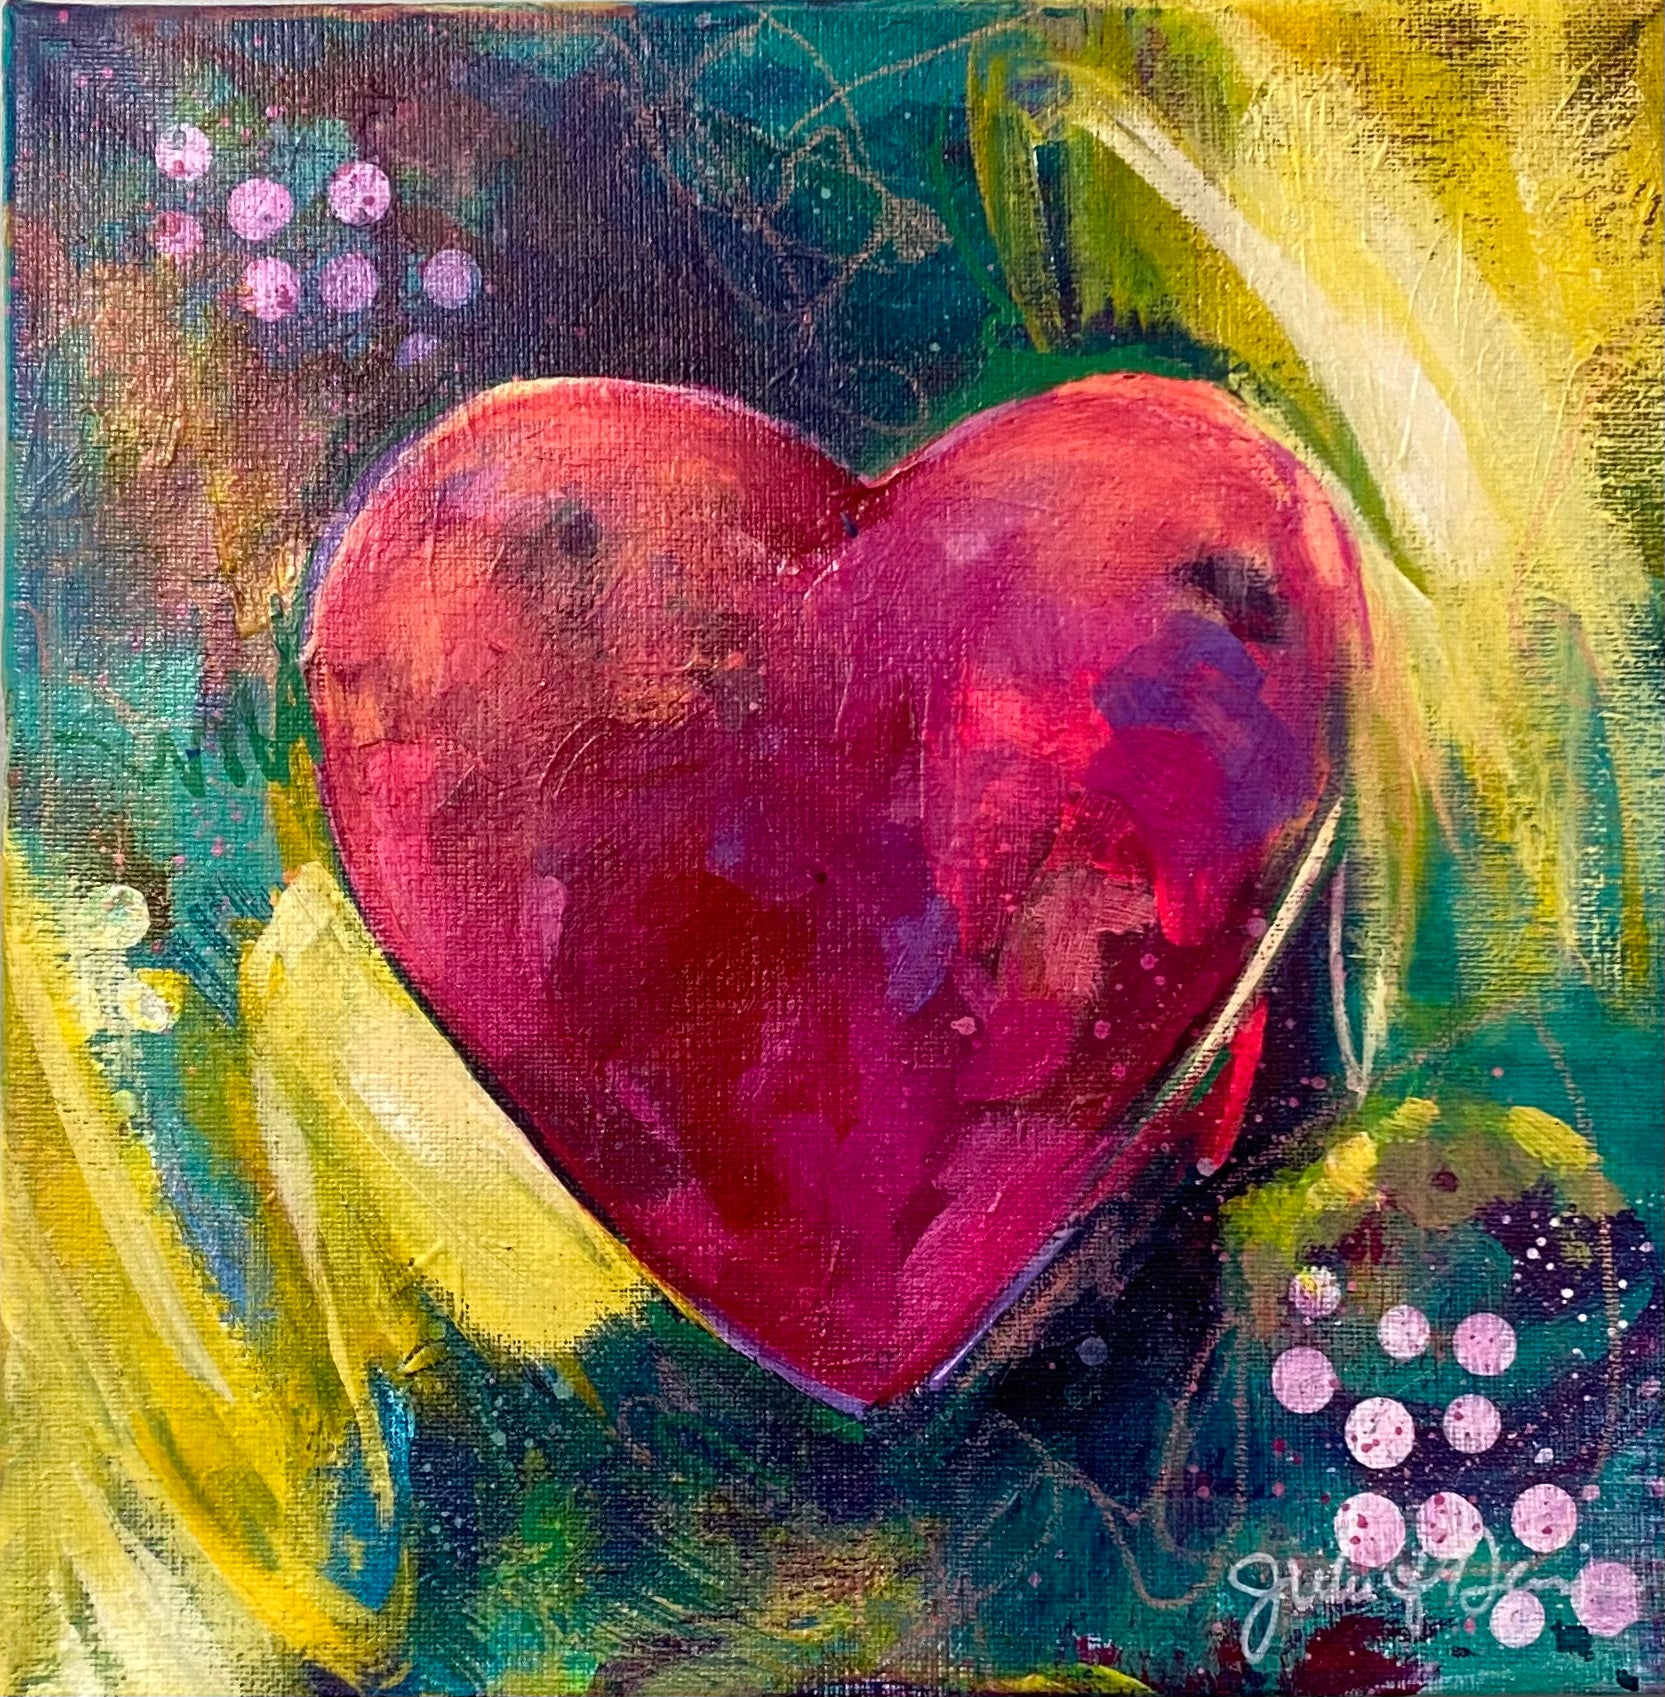 Follow Your Heart No. 2" 11x11" Original on Canvas